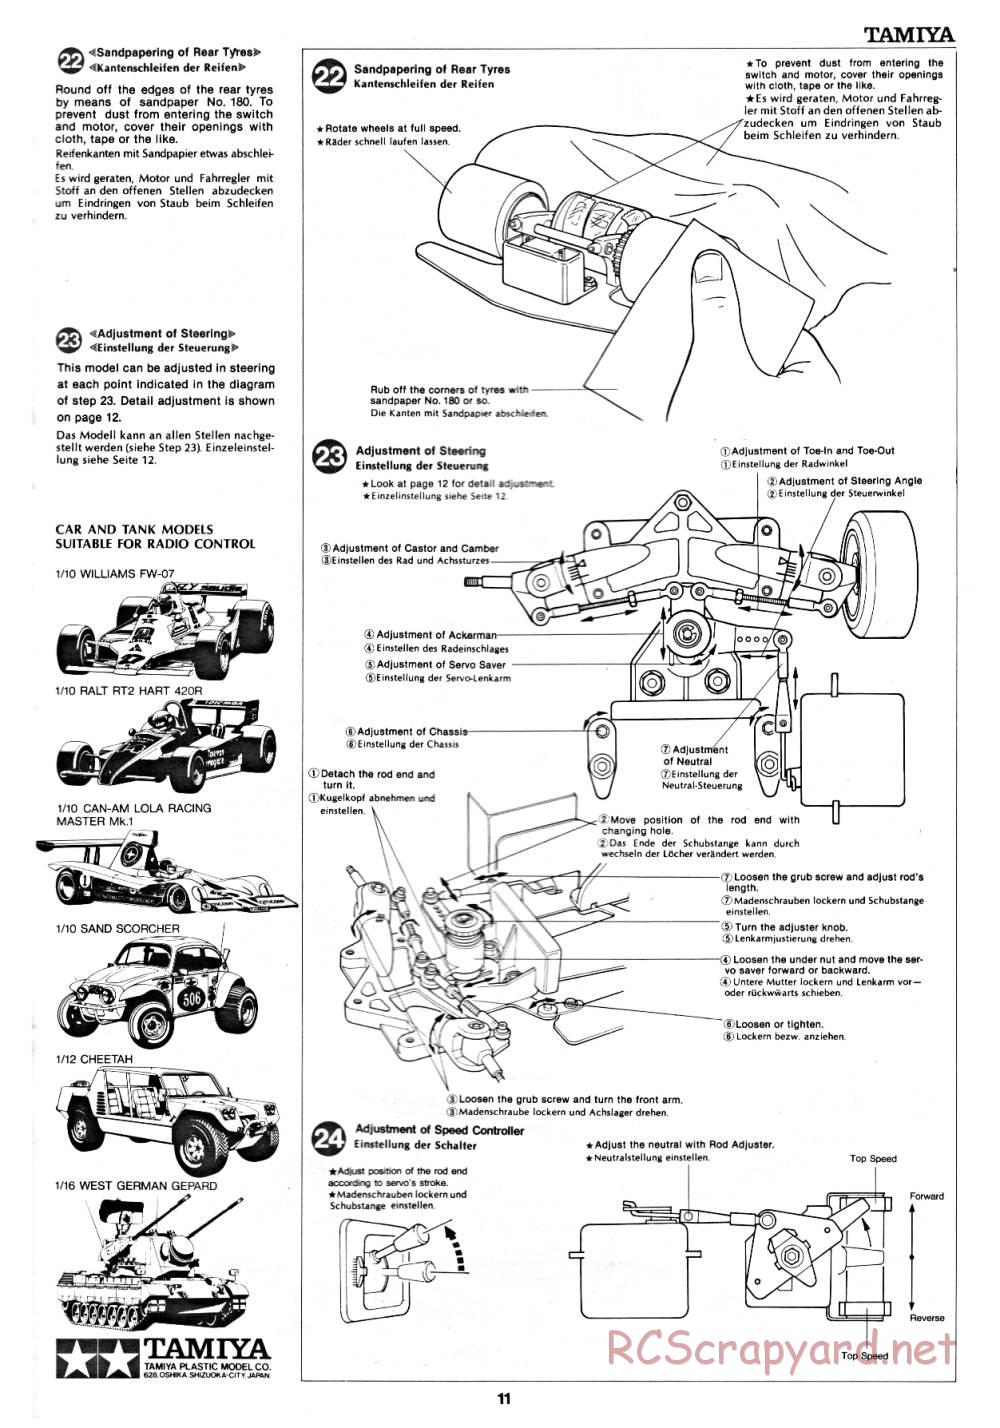 Tamiya - Datsun 280ZX - 58022 - Manual - Page 11